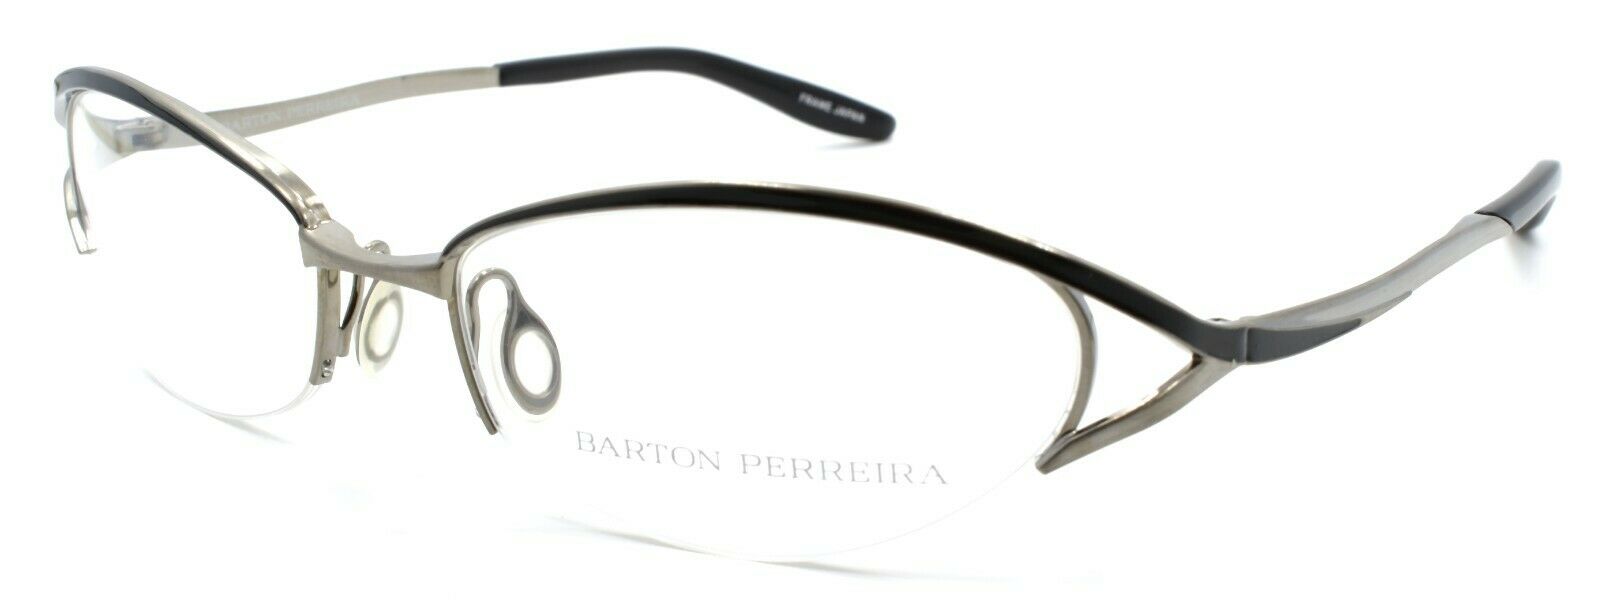 1-Barton Perreira Eliza Women's Eyeglasses Frames 53-17-125 Jet / Antique Silver-672263038177-IKSpecs